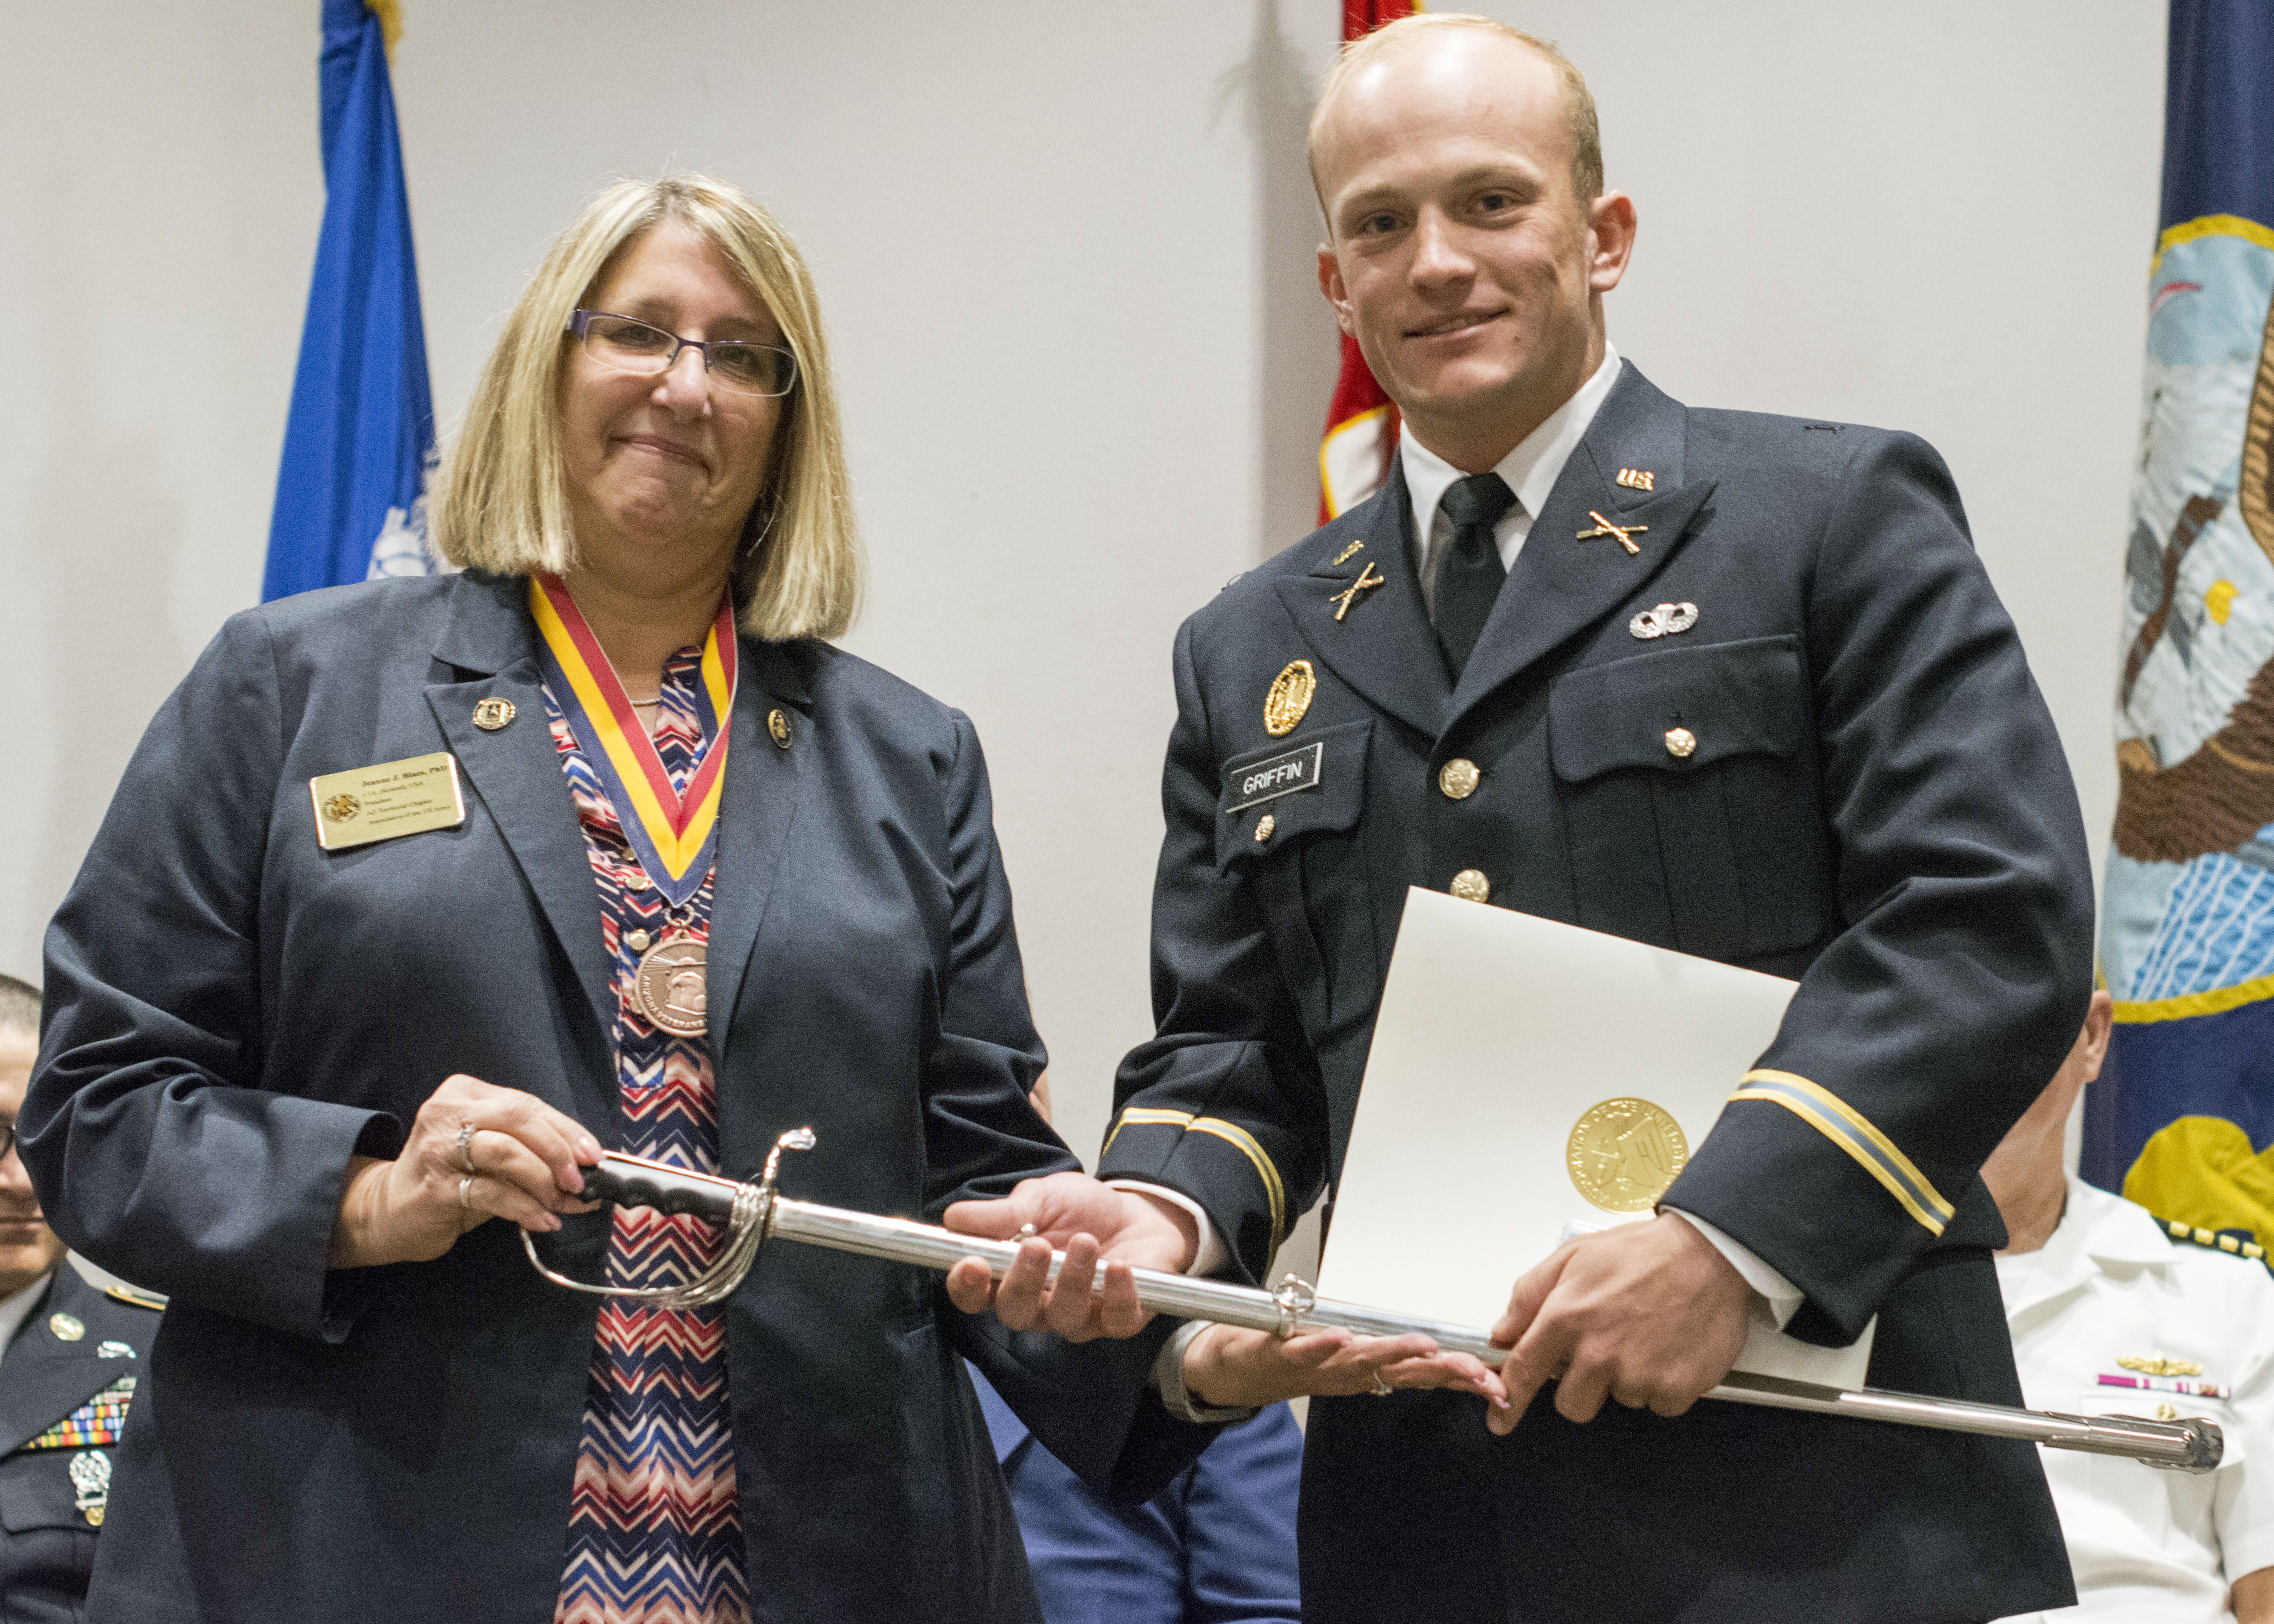 ASU Army ROTC graduate ranked No. 1 cadet in Arizona | ASU News